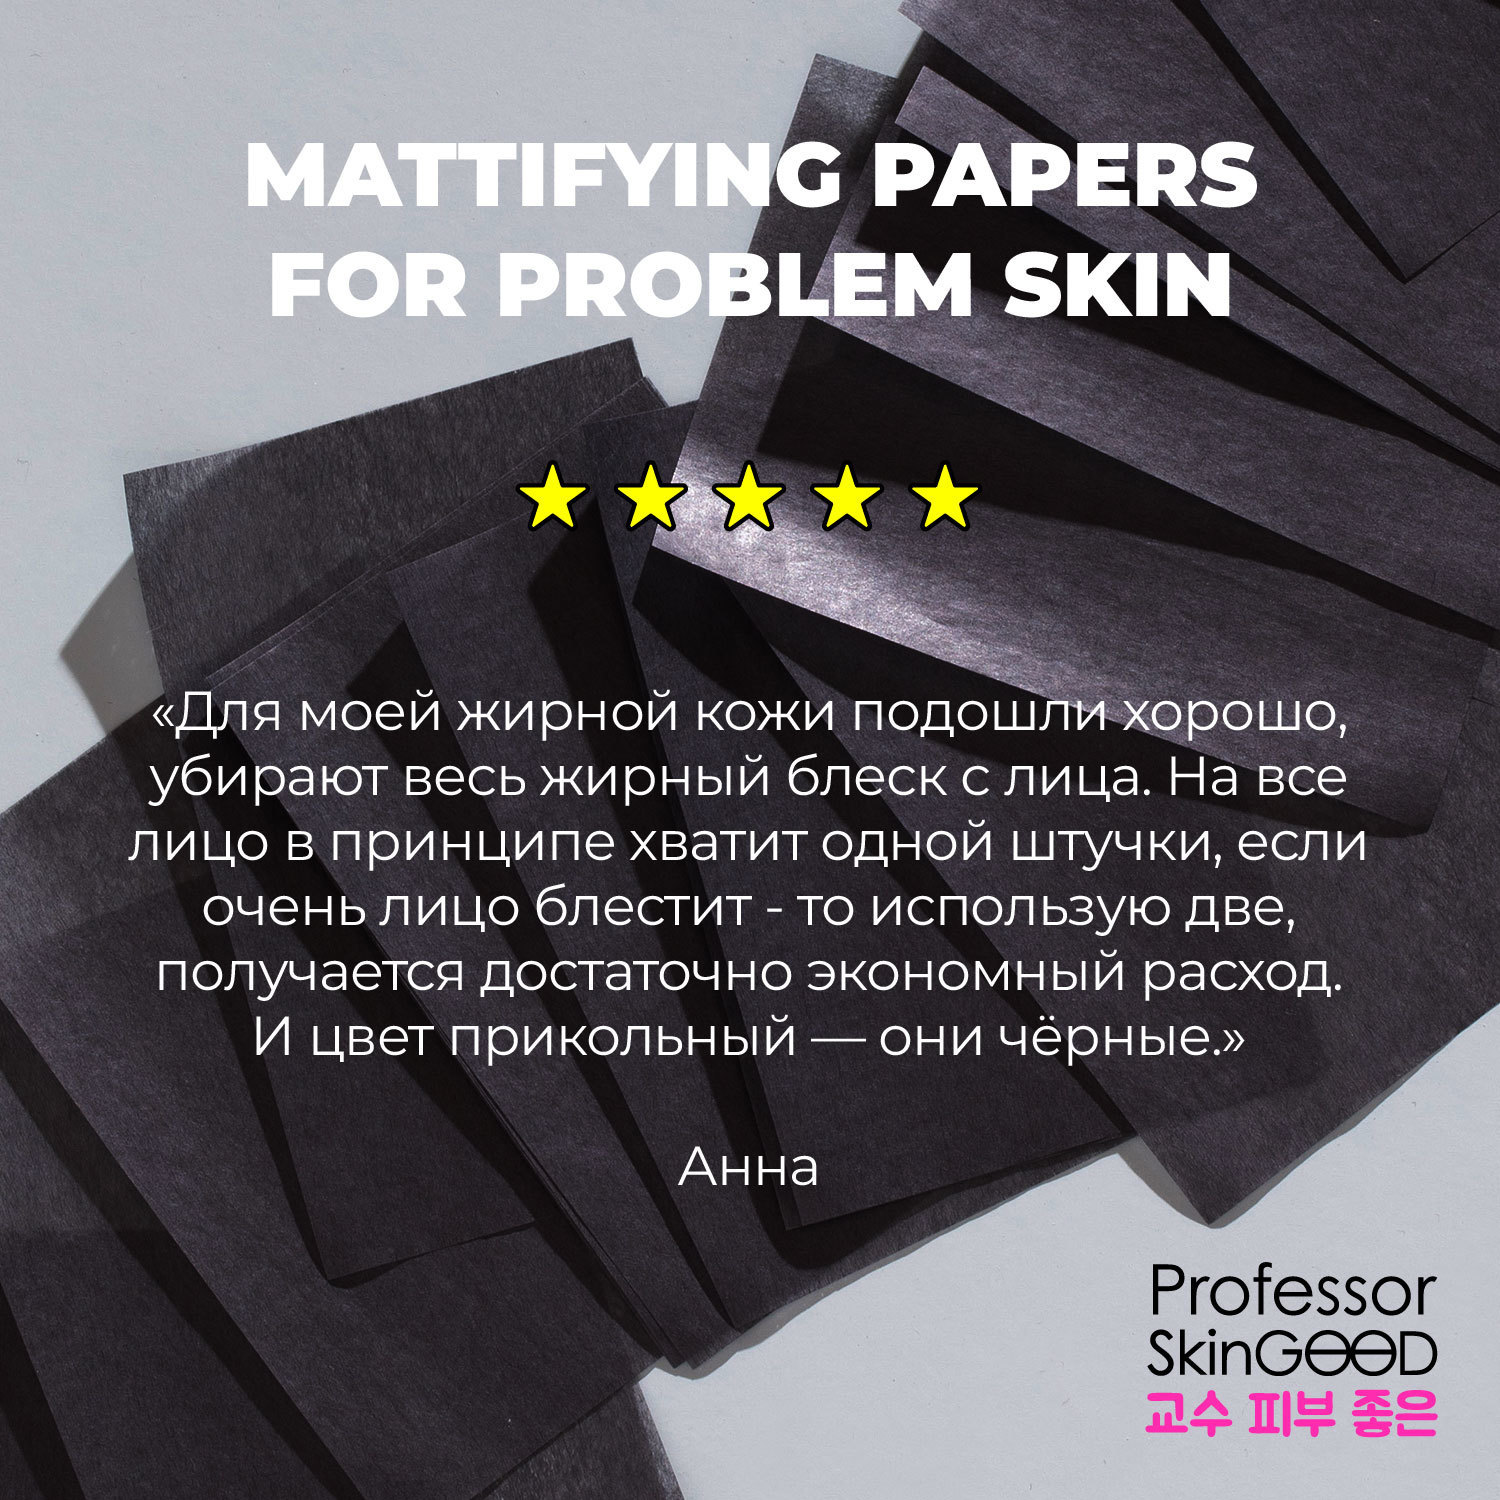 Салфетки Professor SkinGood Mattifying Papers матирующие для проблемной кожи 50 шт - фото 8